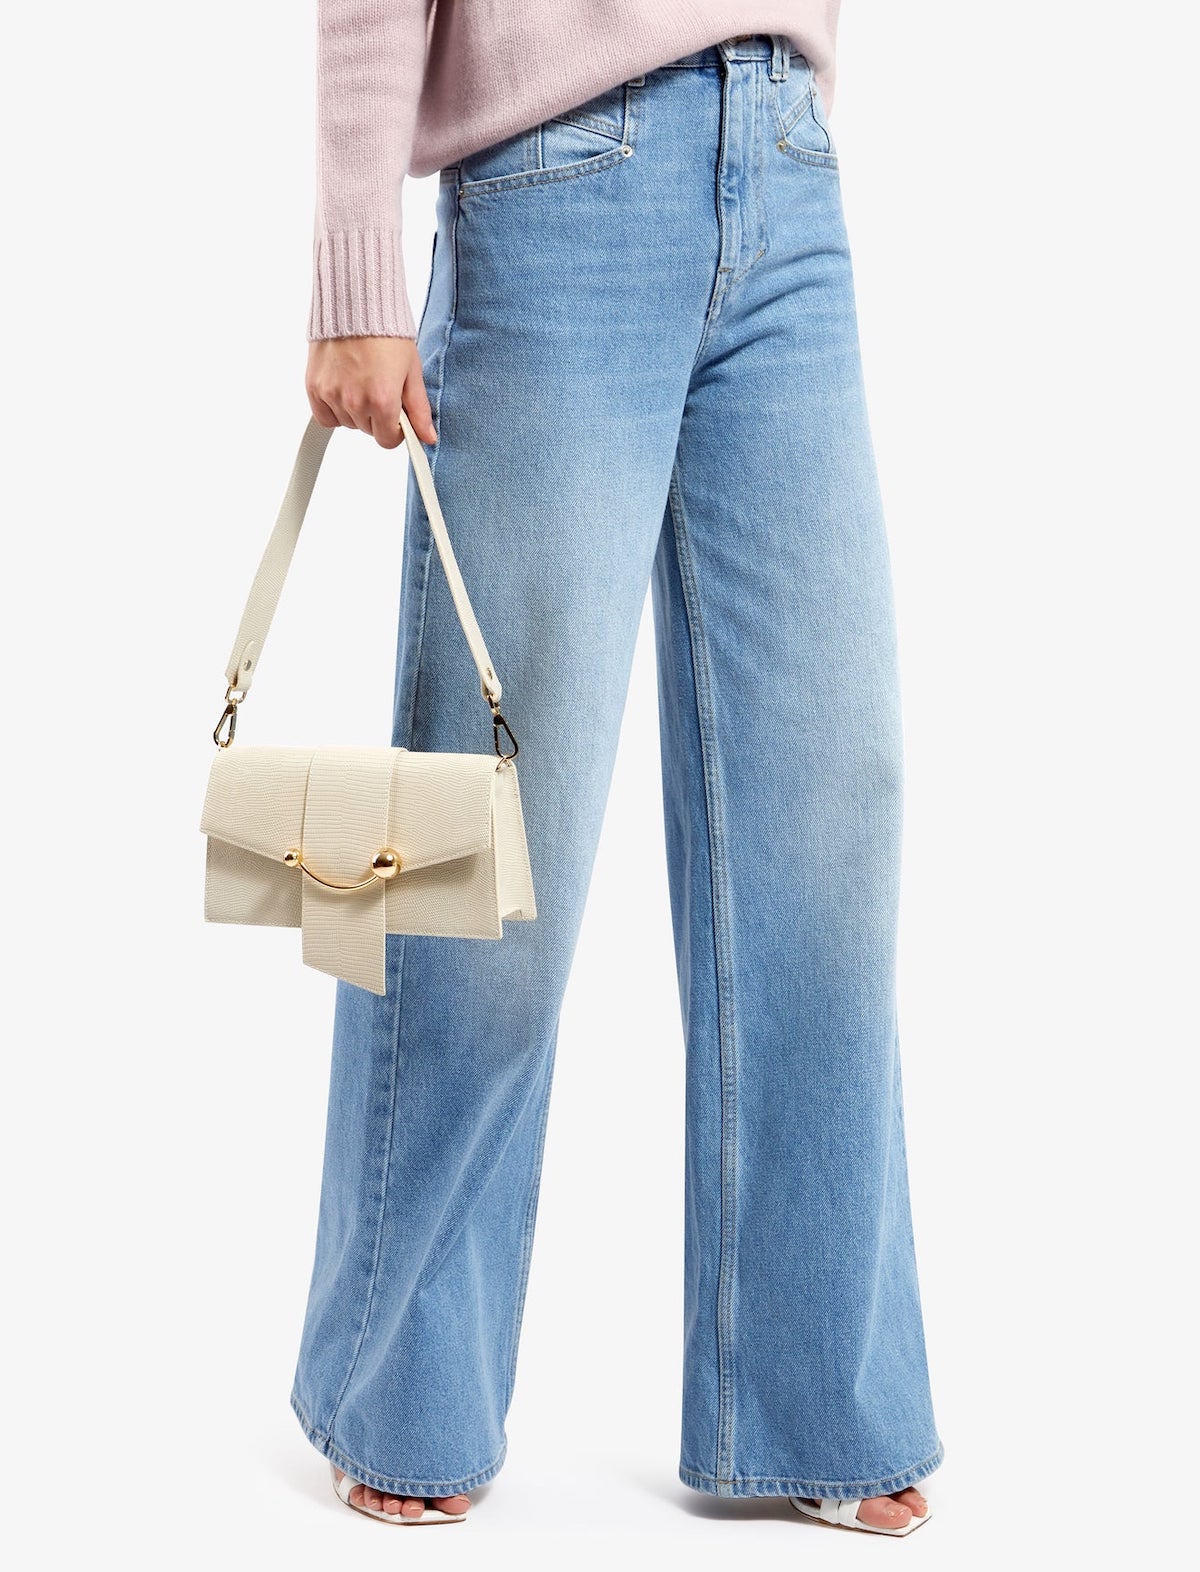 STRATHBERRY Mini Crescent Bag in Embossed Vanilla